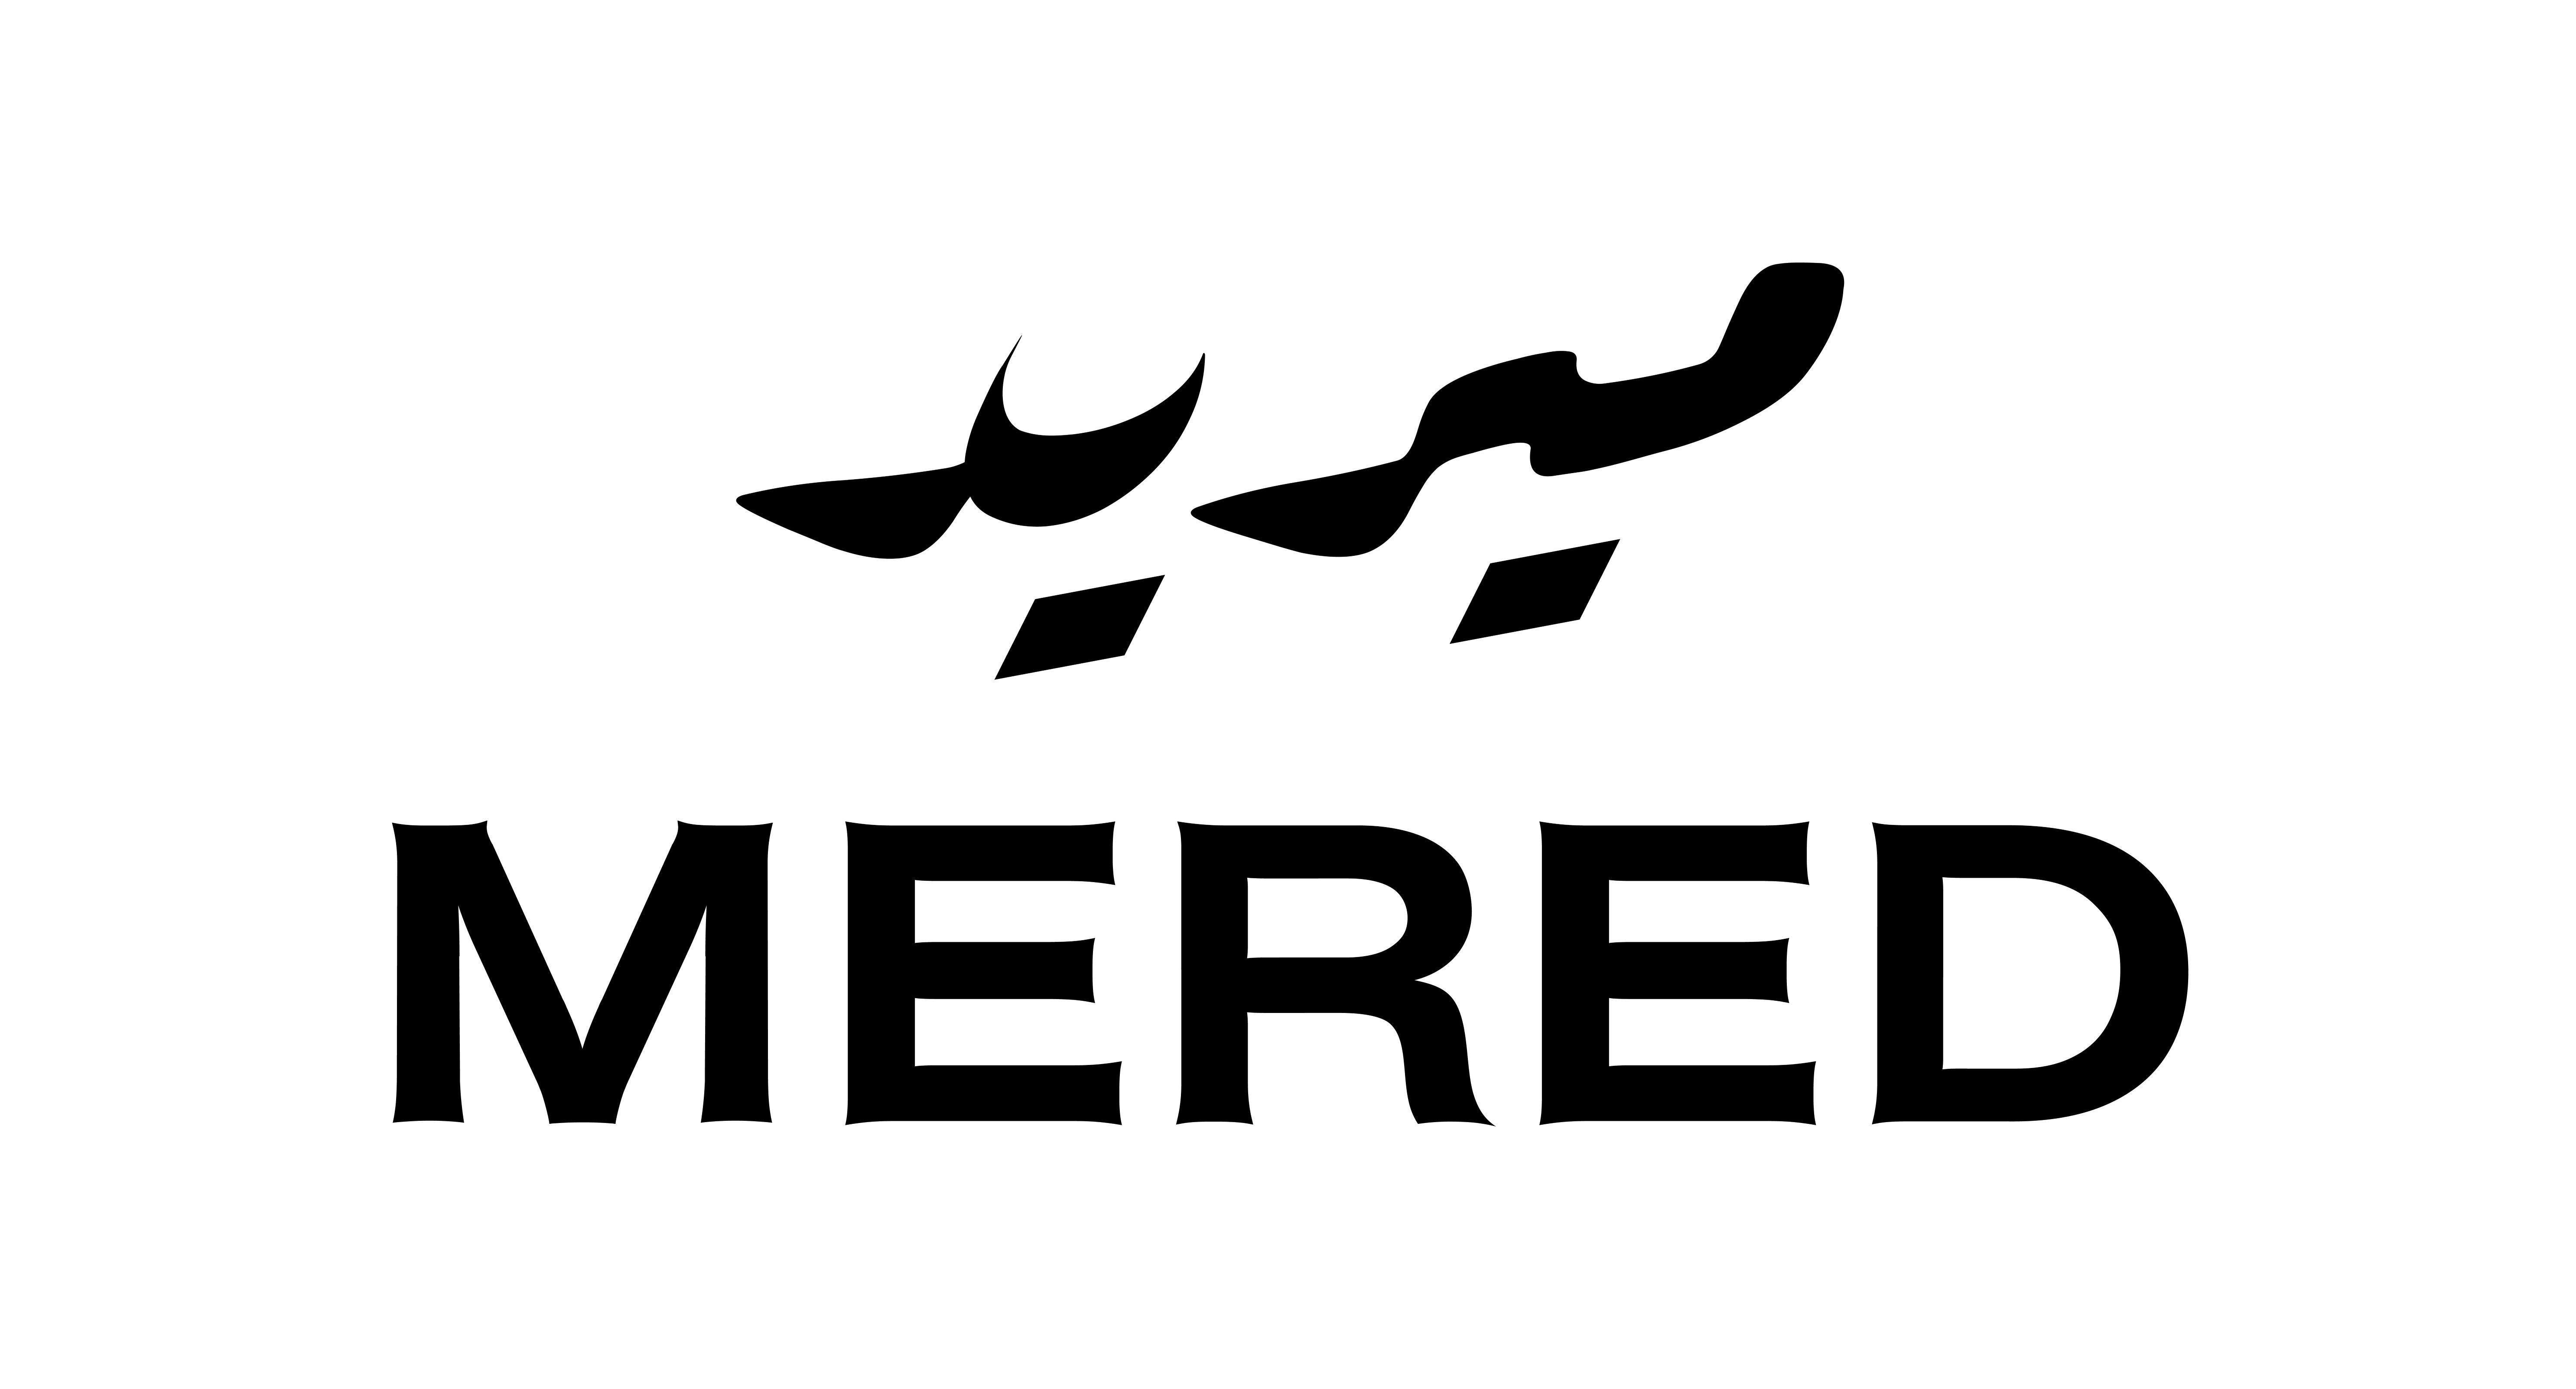 MERED